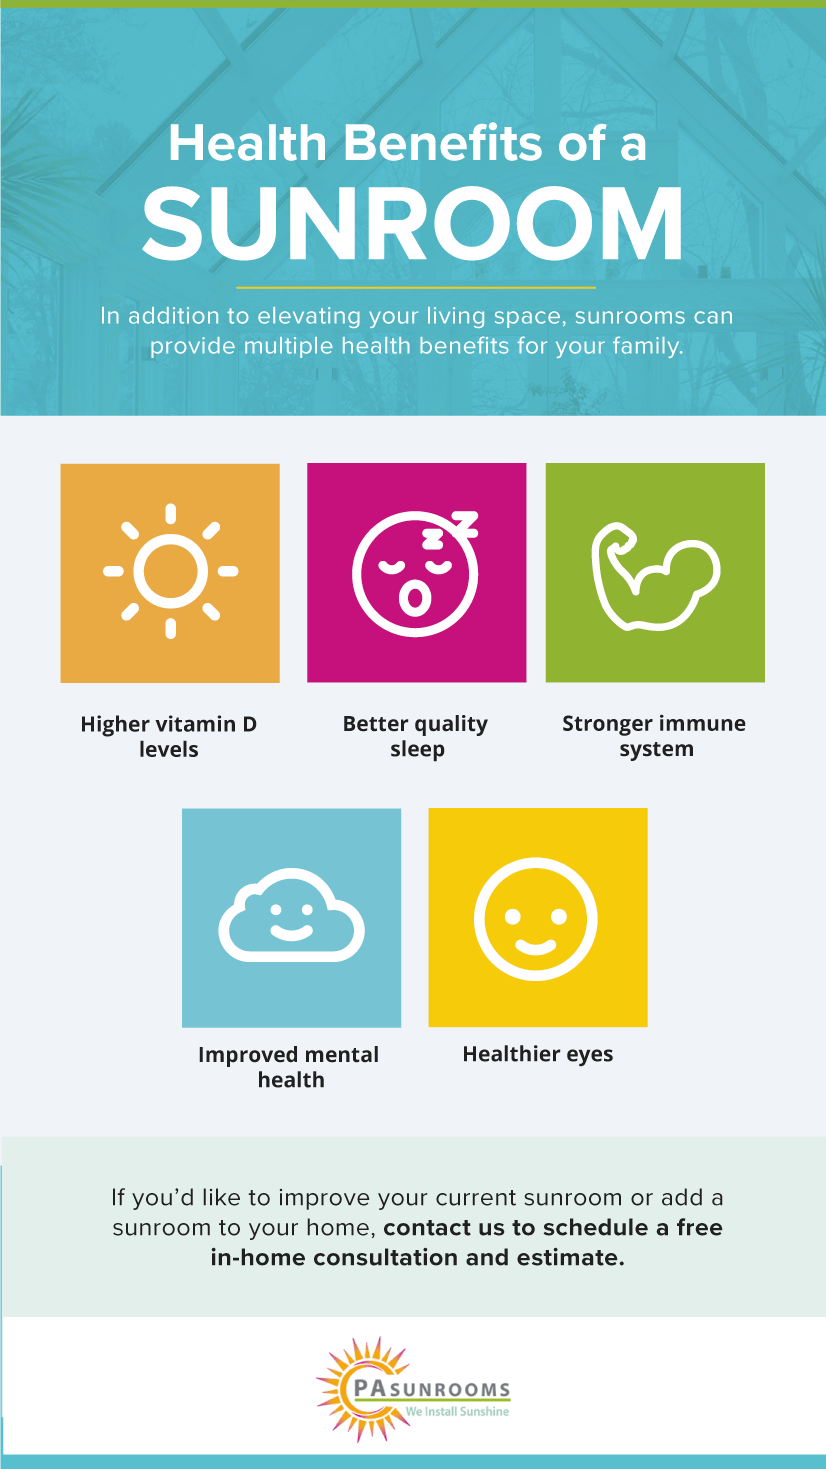 Health Benefits of a Sunroom